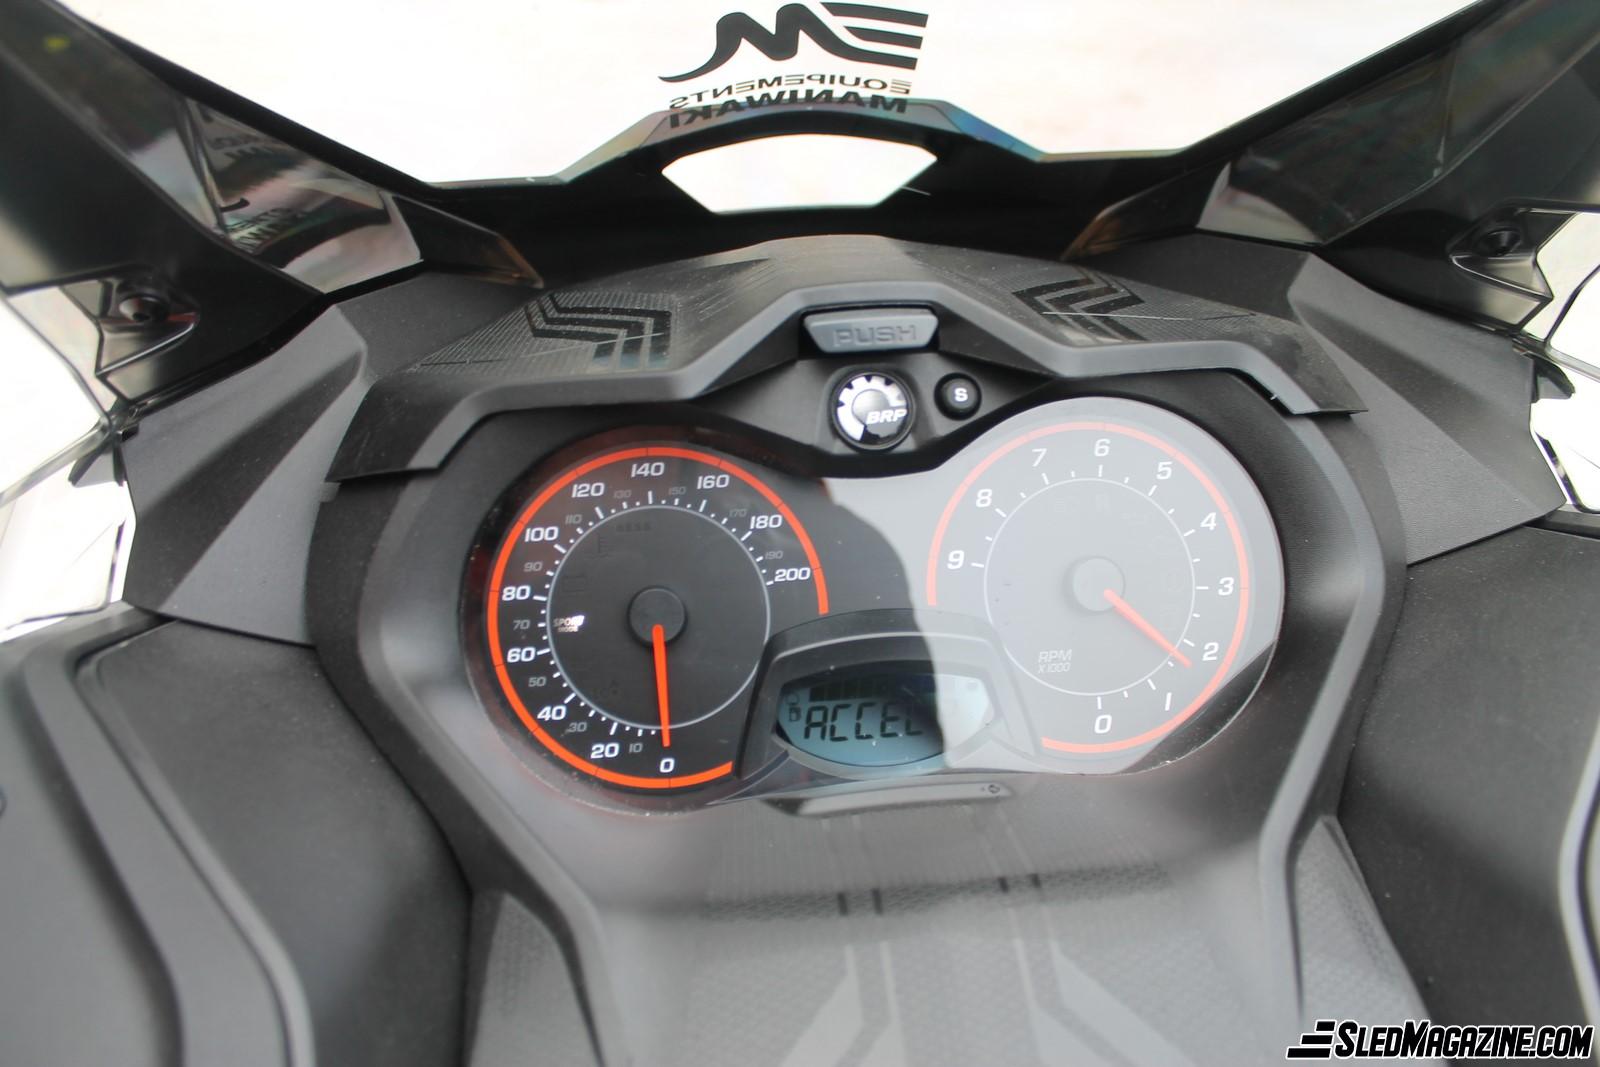 nd of Season Review - Renegade Adrenaline 900 ACE Turbo - Snowmobile - Snowmobiler